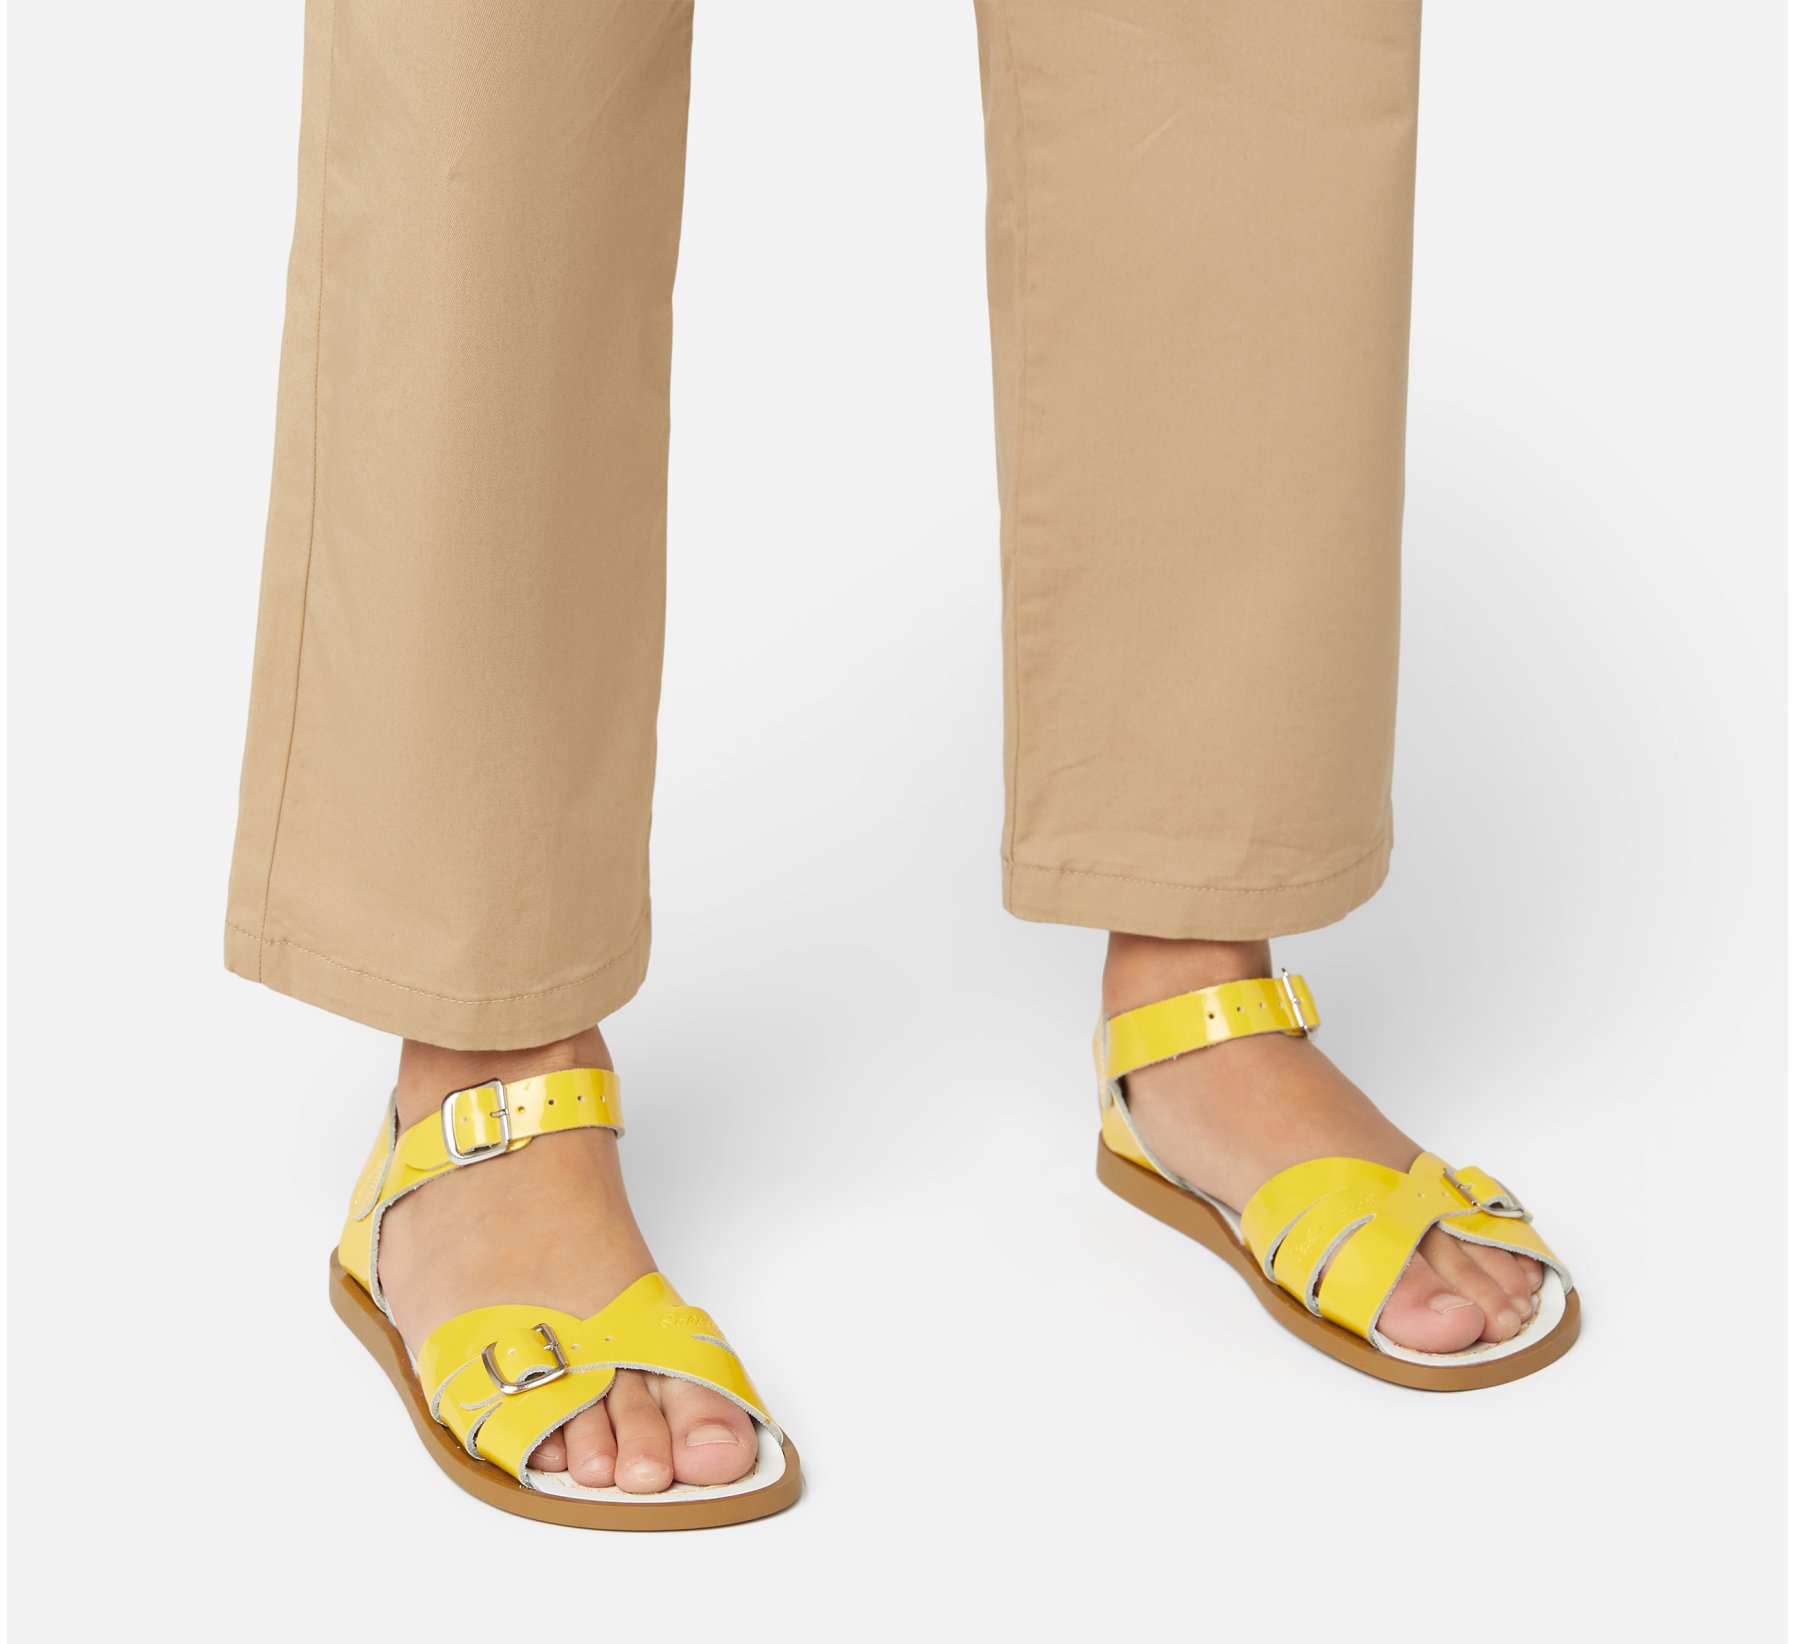 Classic Shiny Yellow Kids Sandals - Salt Water Sandals